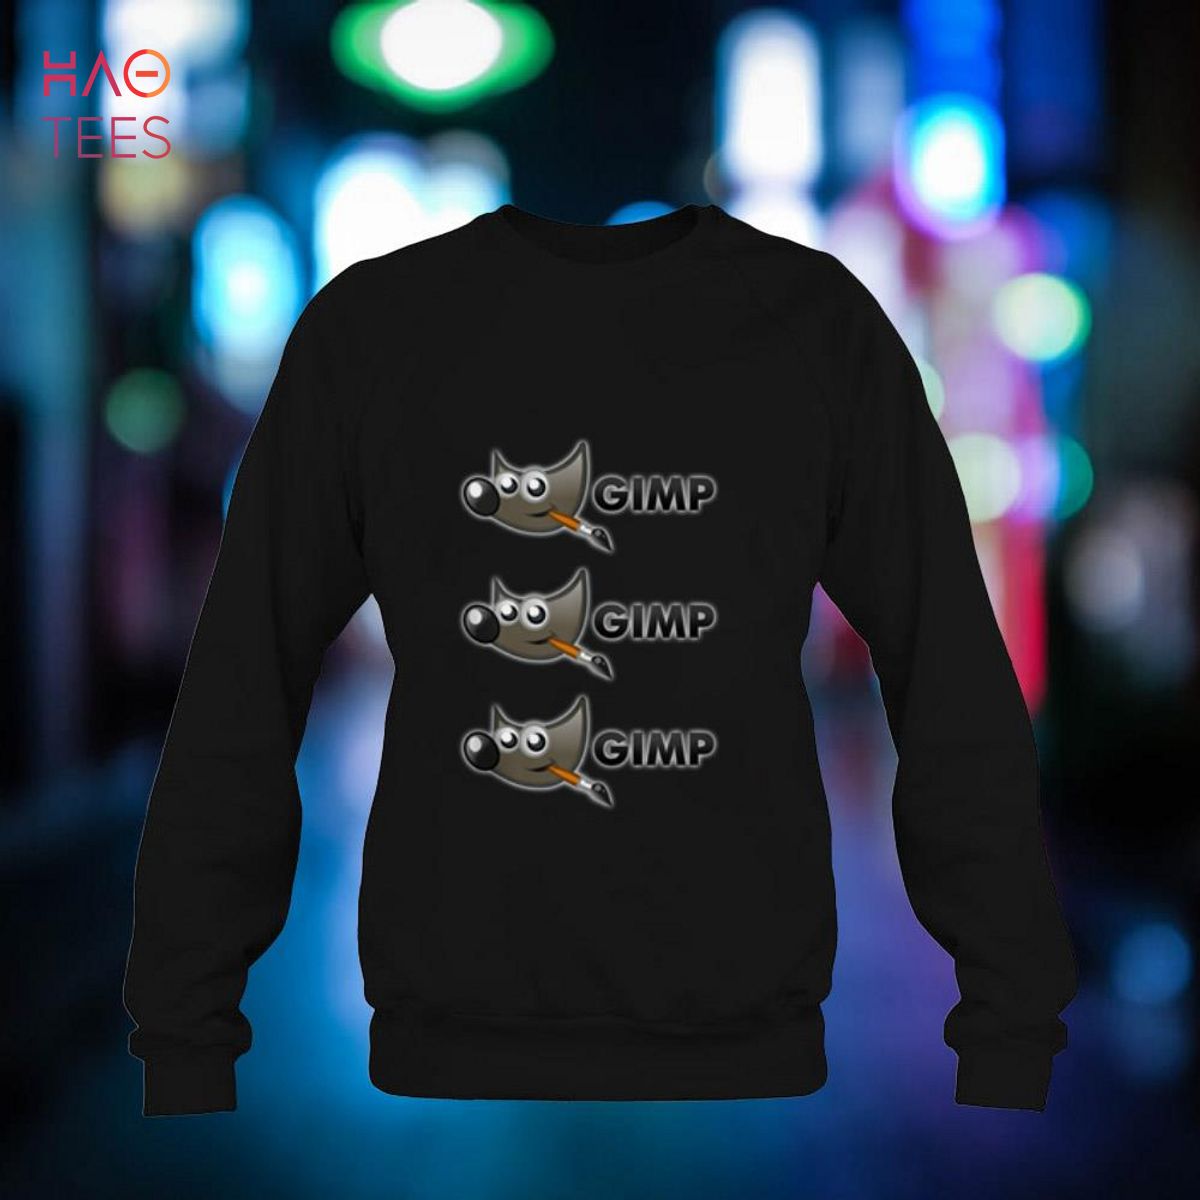 GIMP Graphics Editor - Designers, Artists, Illustrators v.9 Shirt